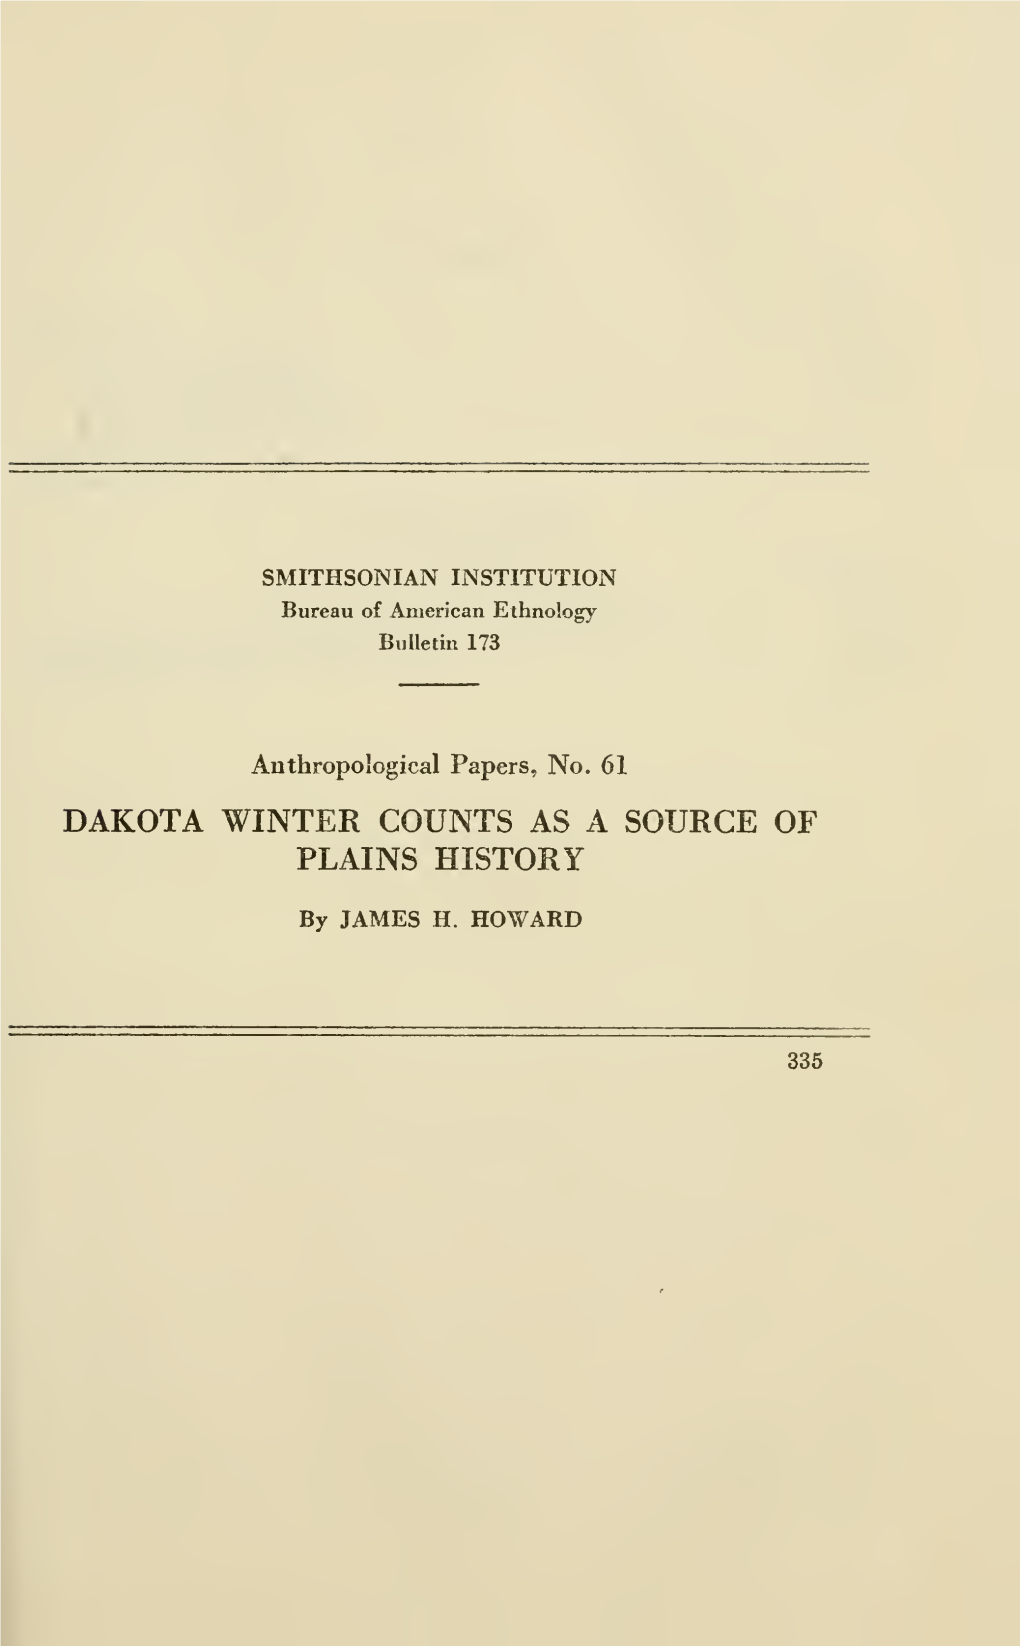 Dakota Winter Counts As a Source of Plains History